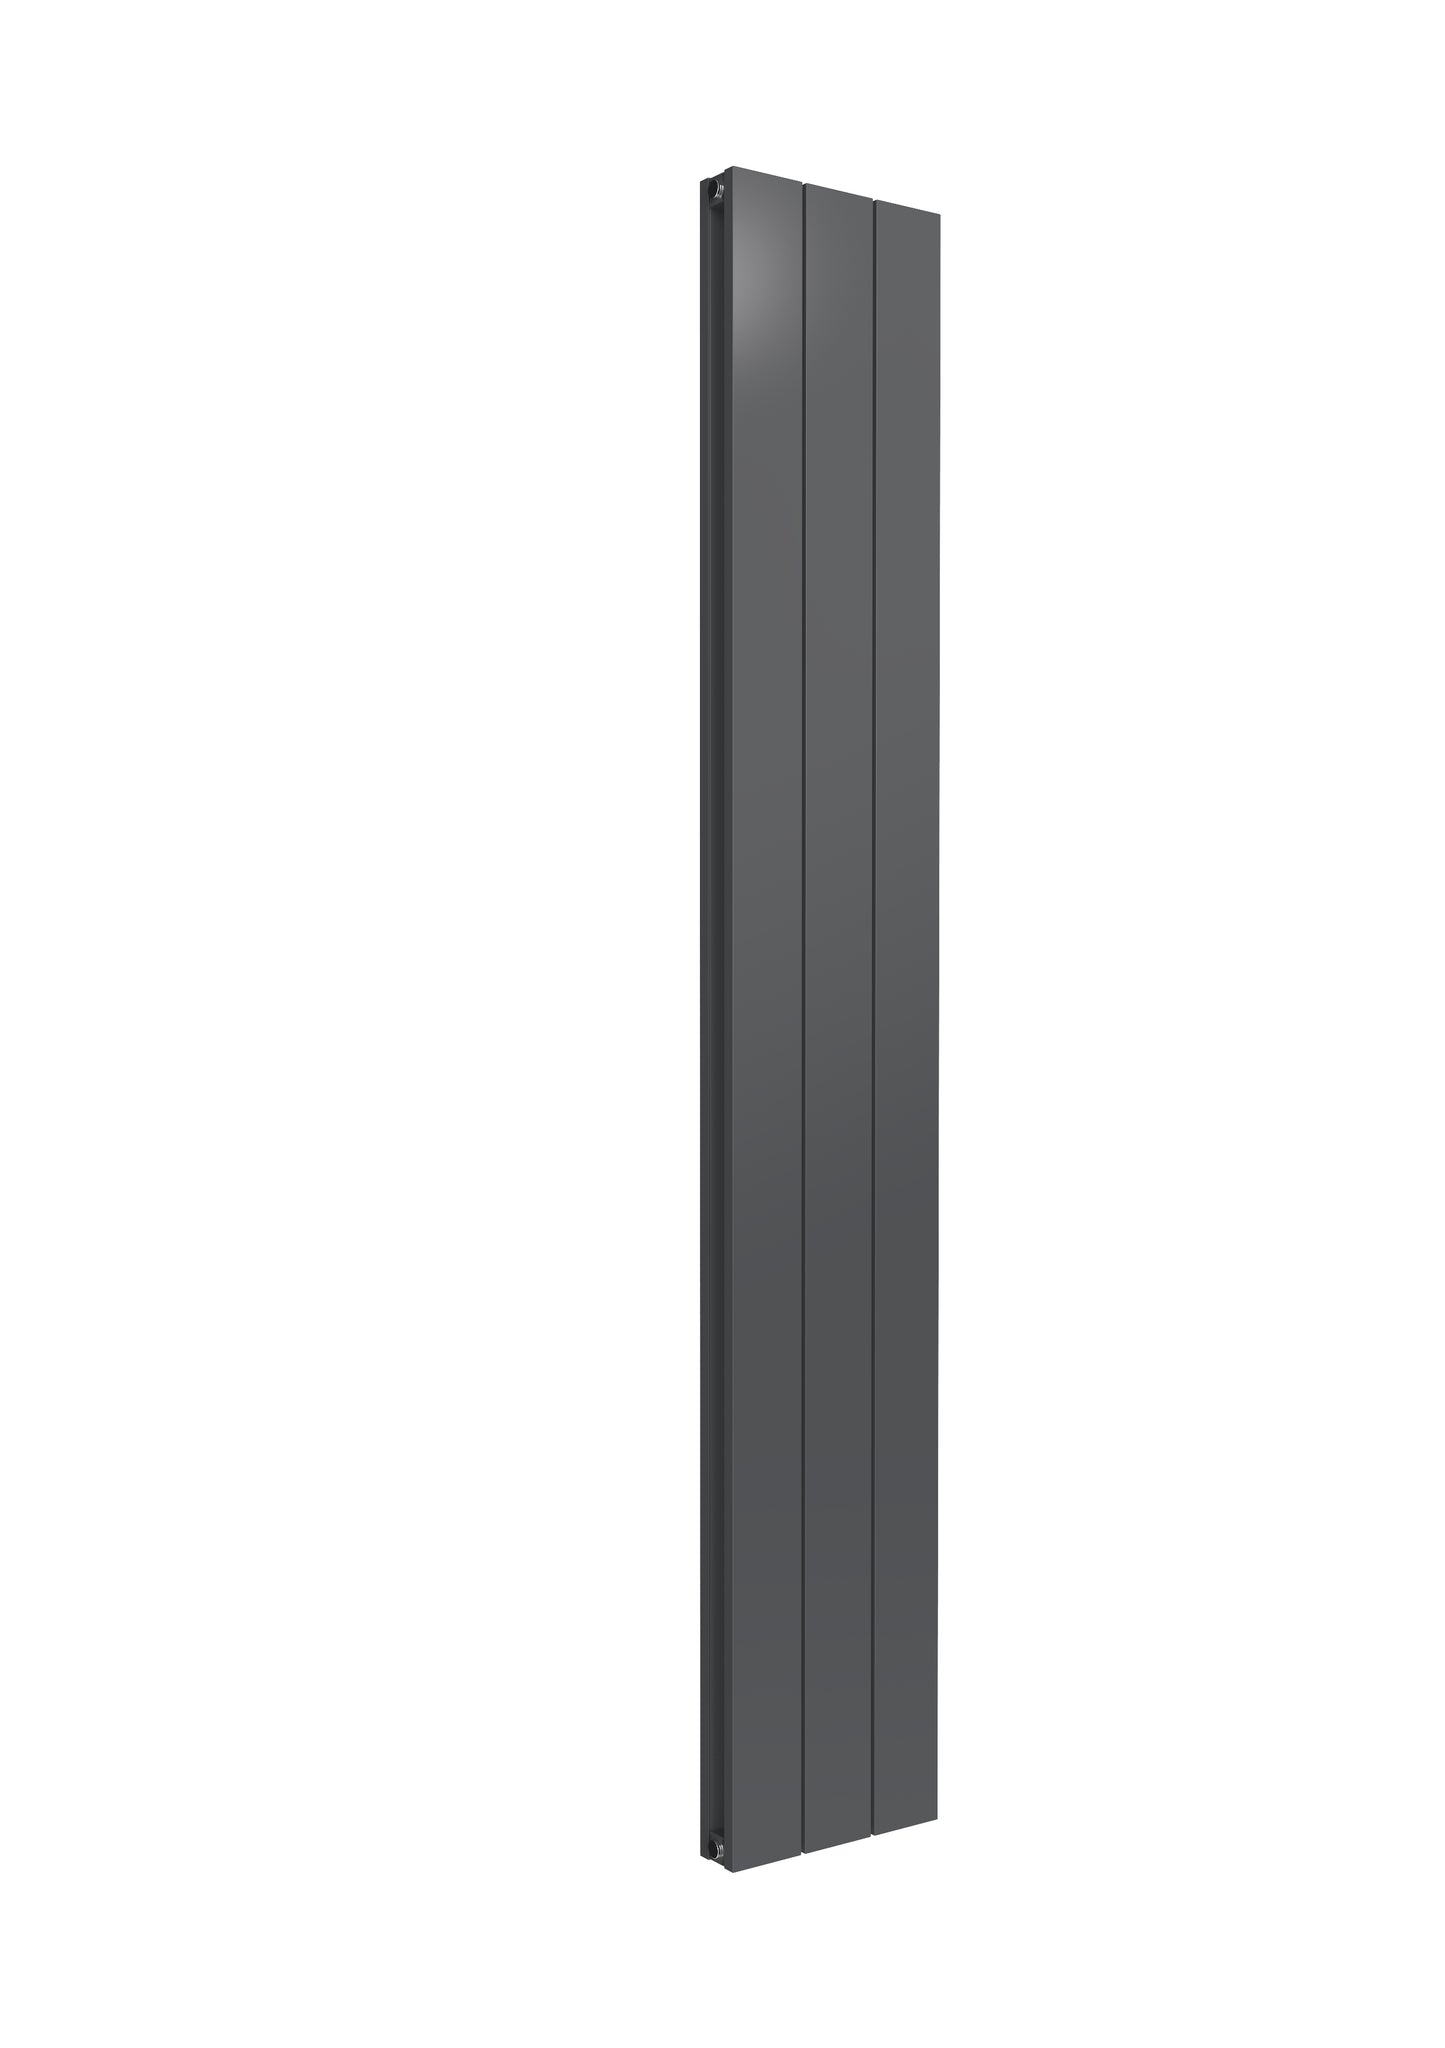 Casina Vertical Double Aluminium Radiator - 1800mm Tall - Anthracite - Various Sizes